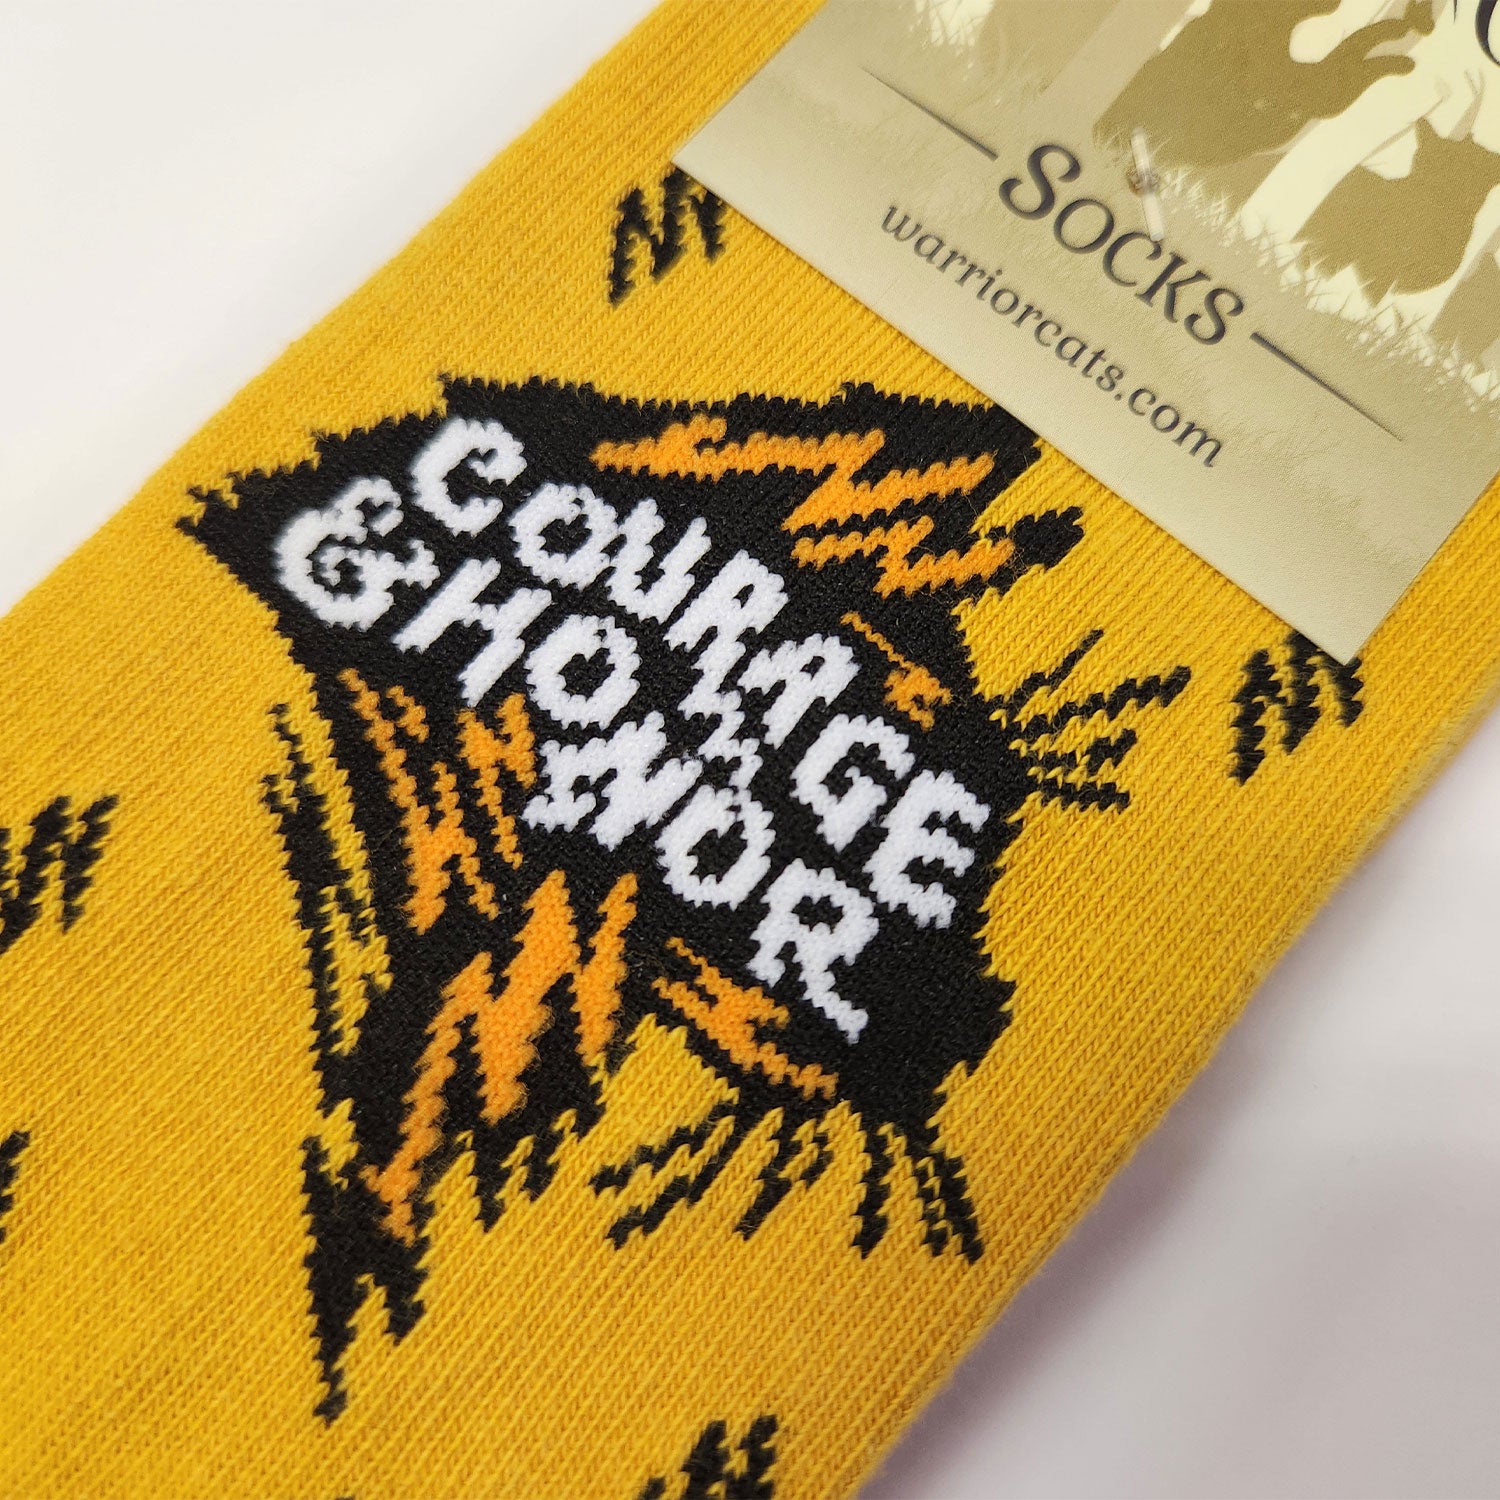 Courage & Honor Socks